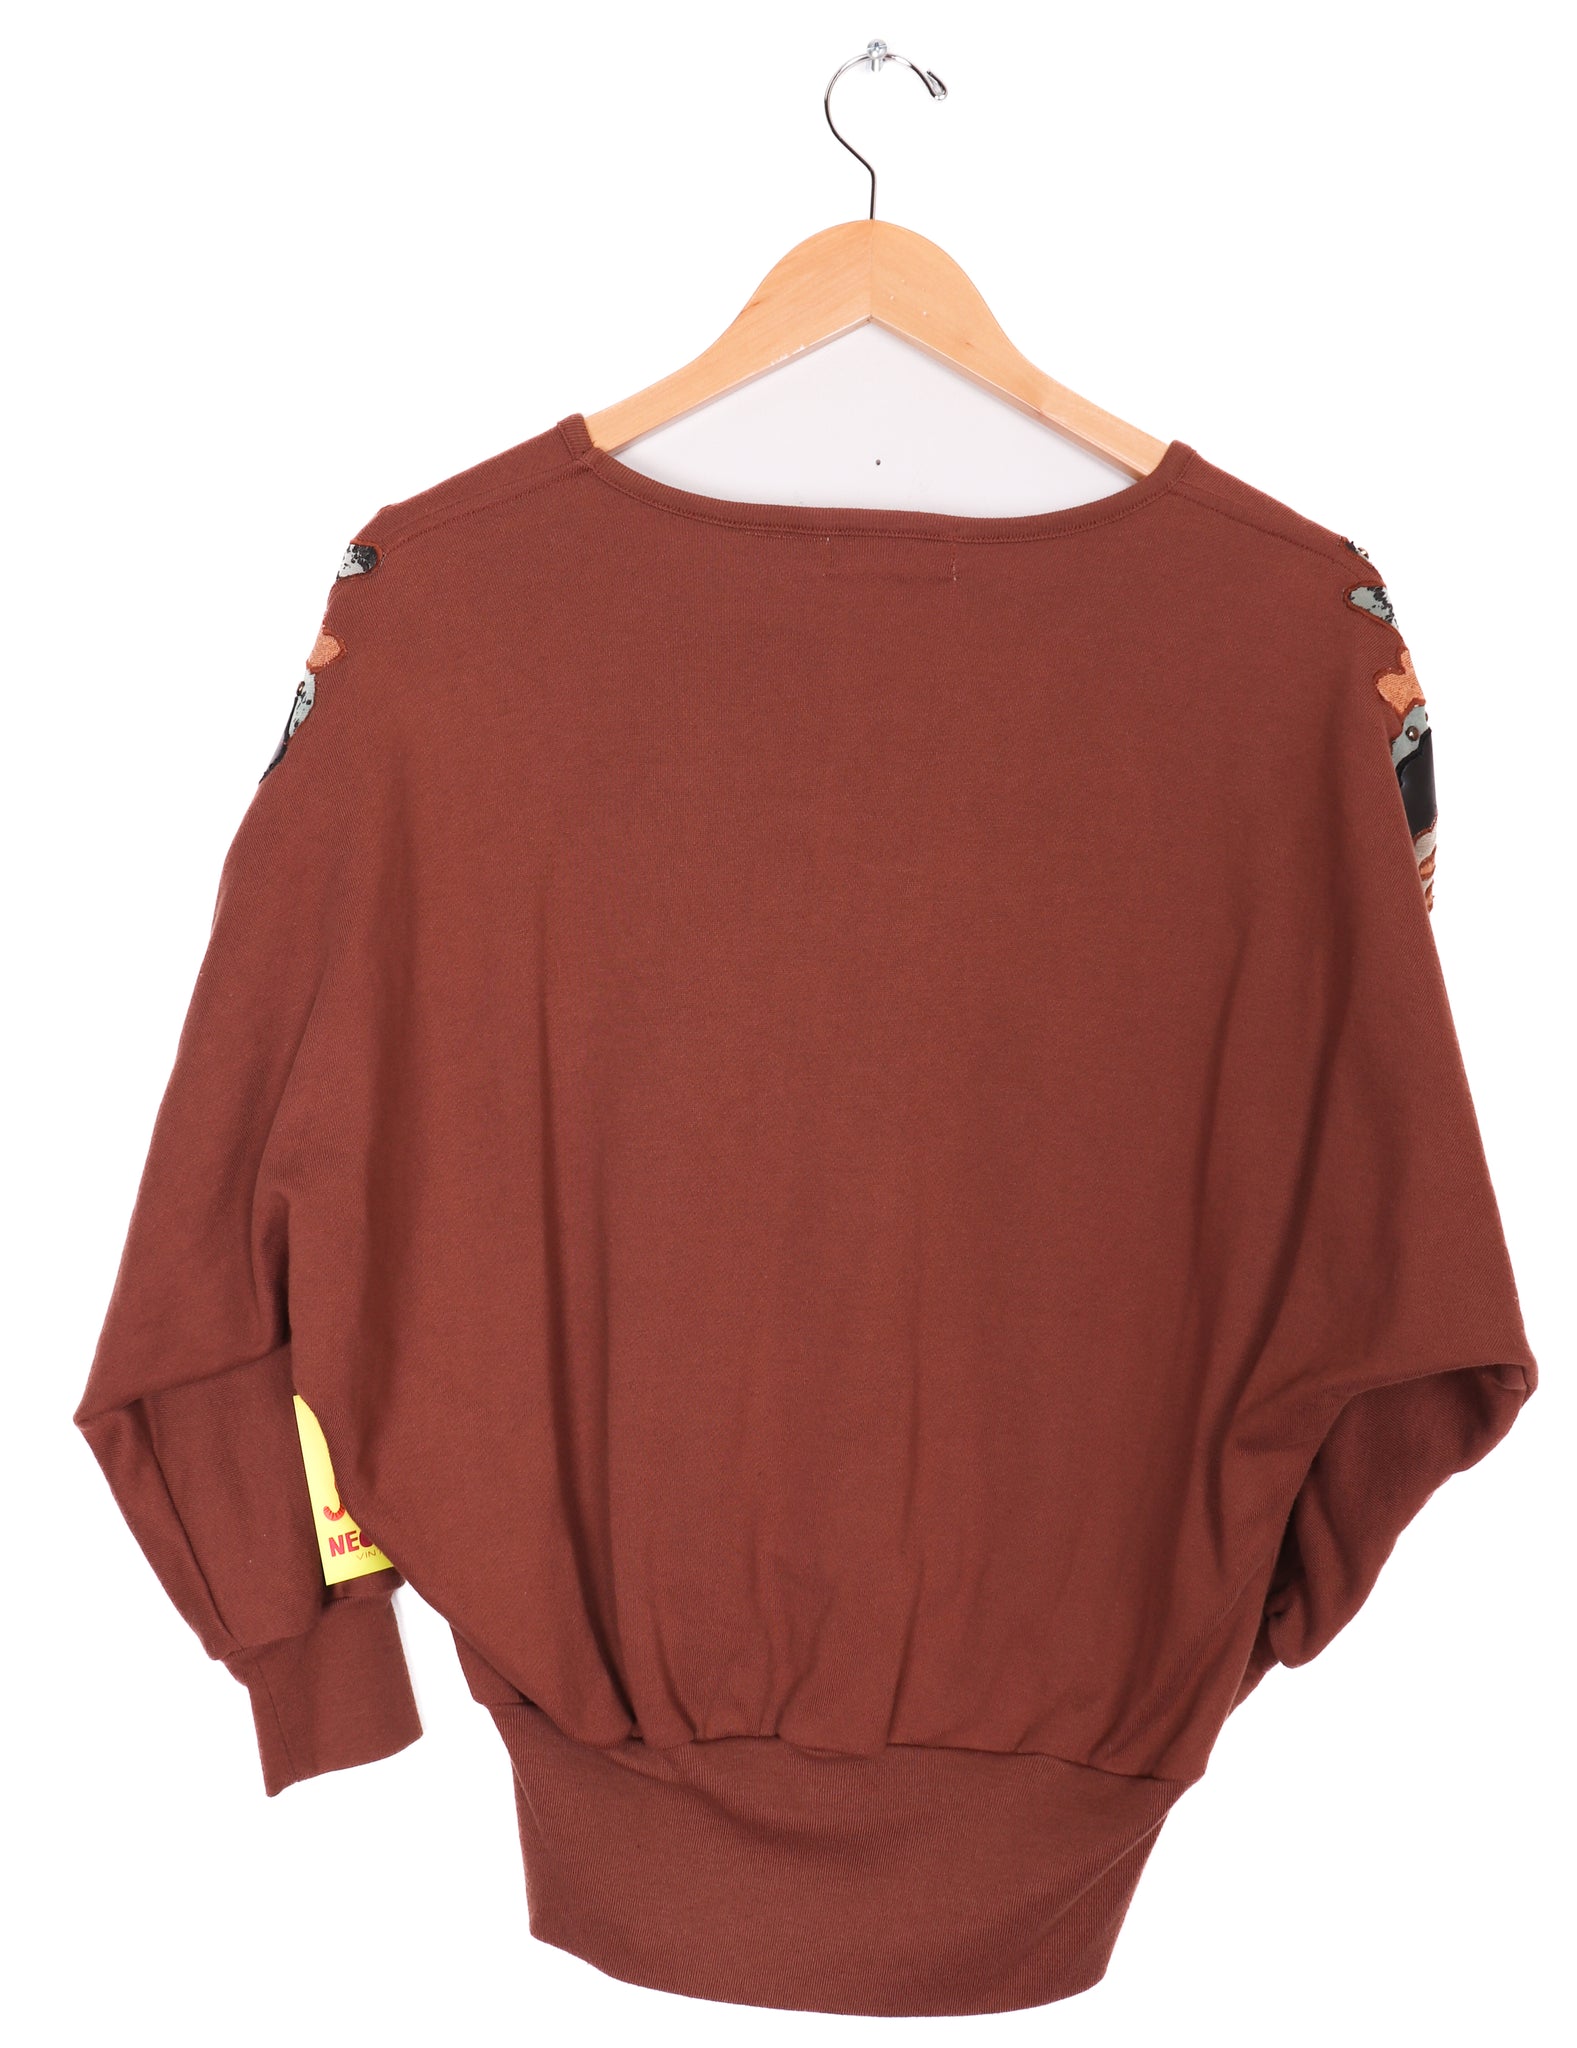 80s-90s Mariea Kim Funky Shoulders Sweater Top